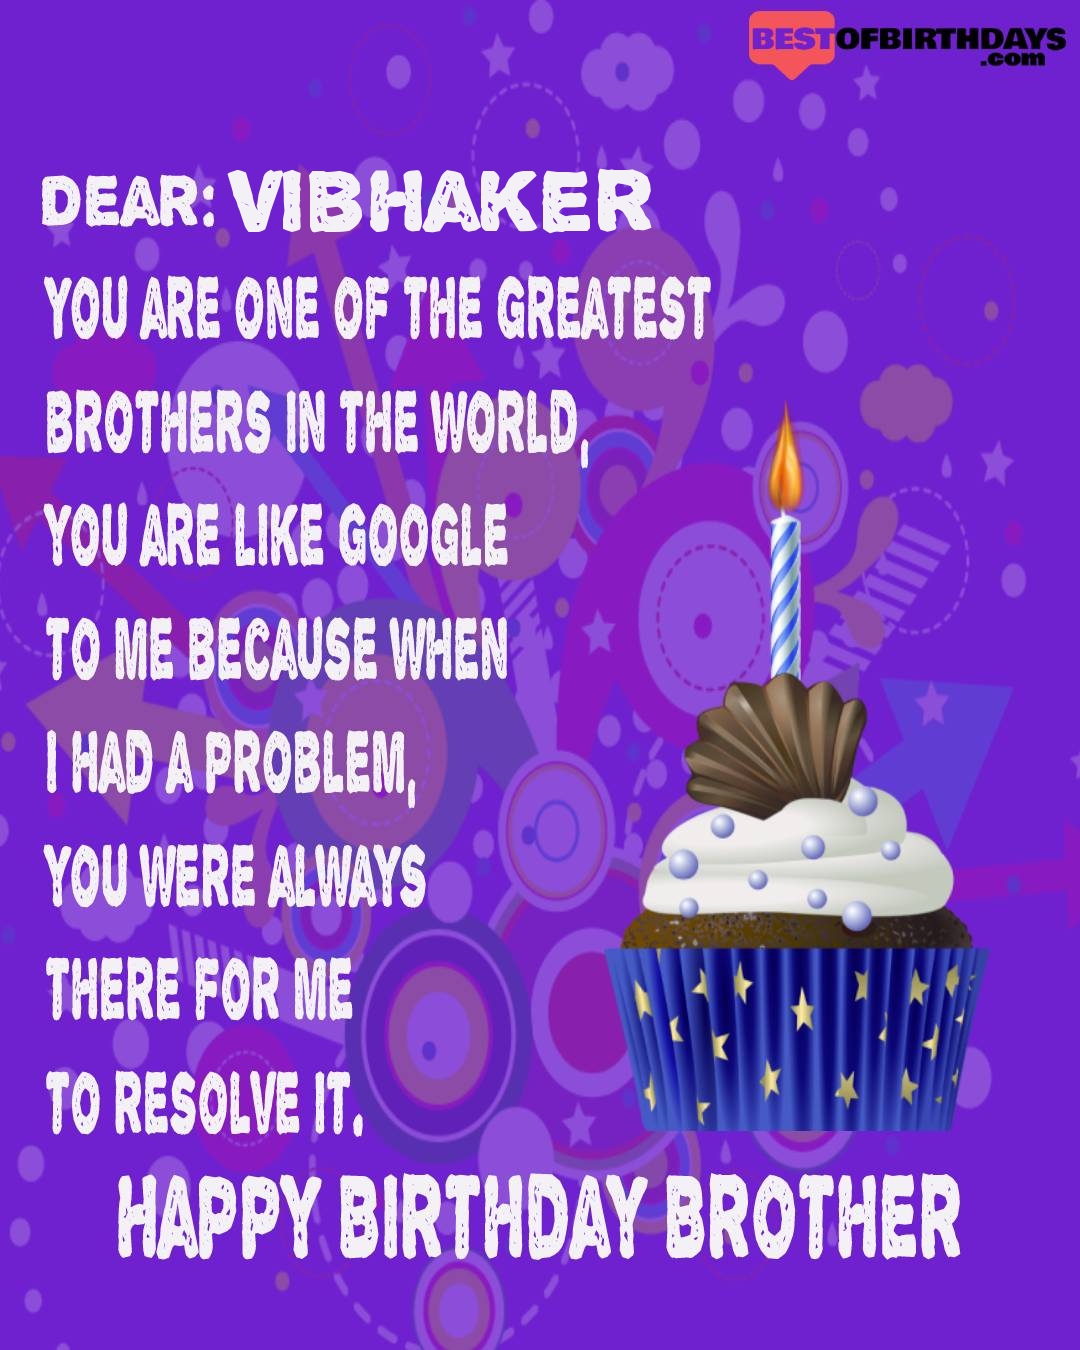 Happy birthday vibhaker bhai brother bro